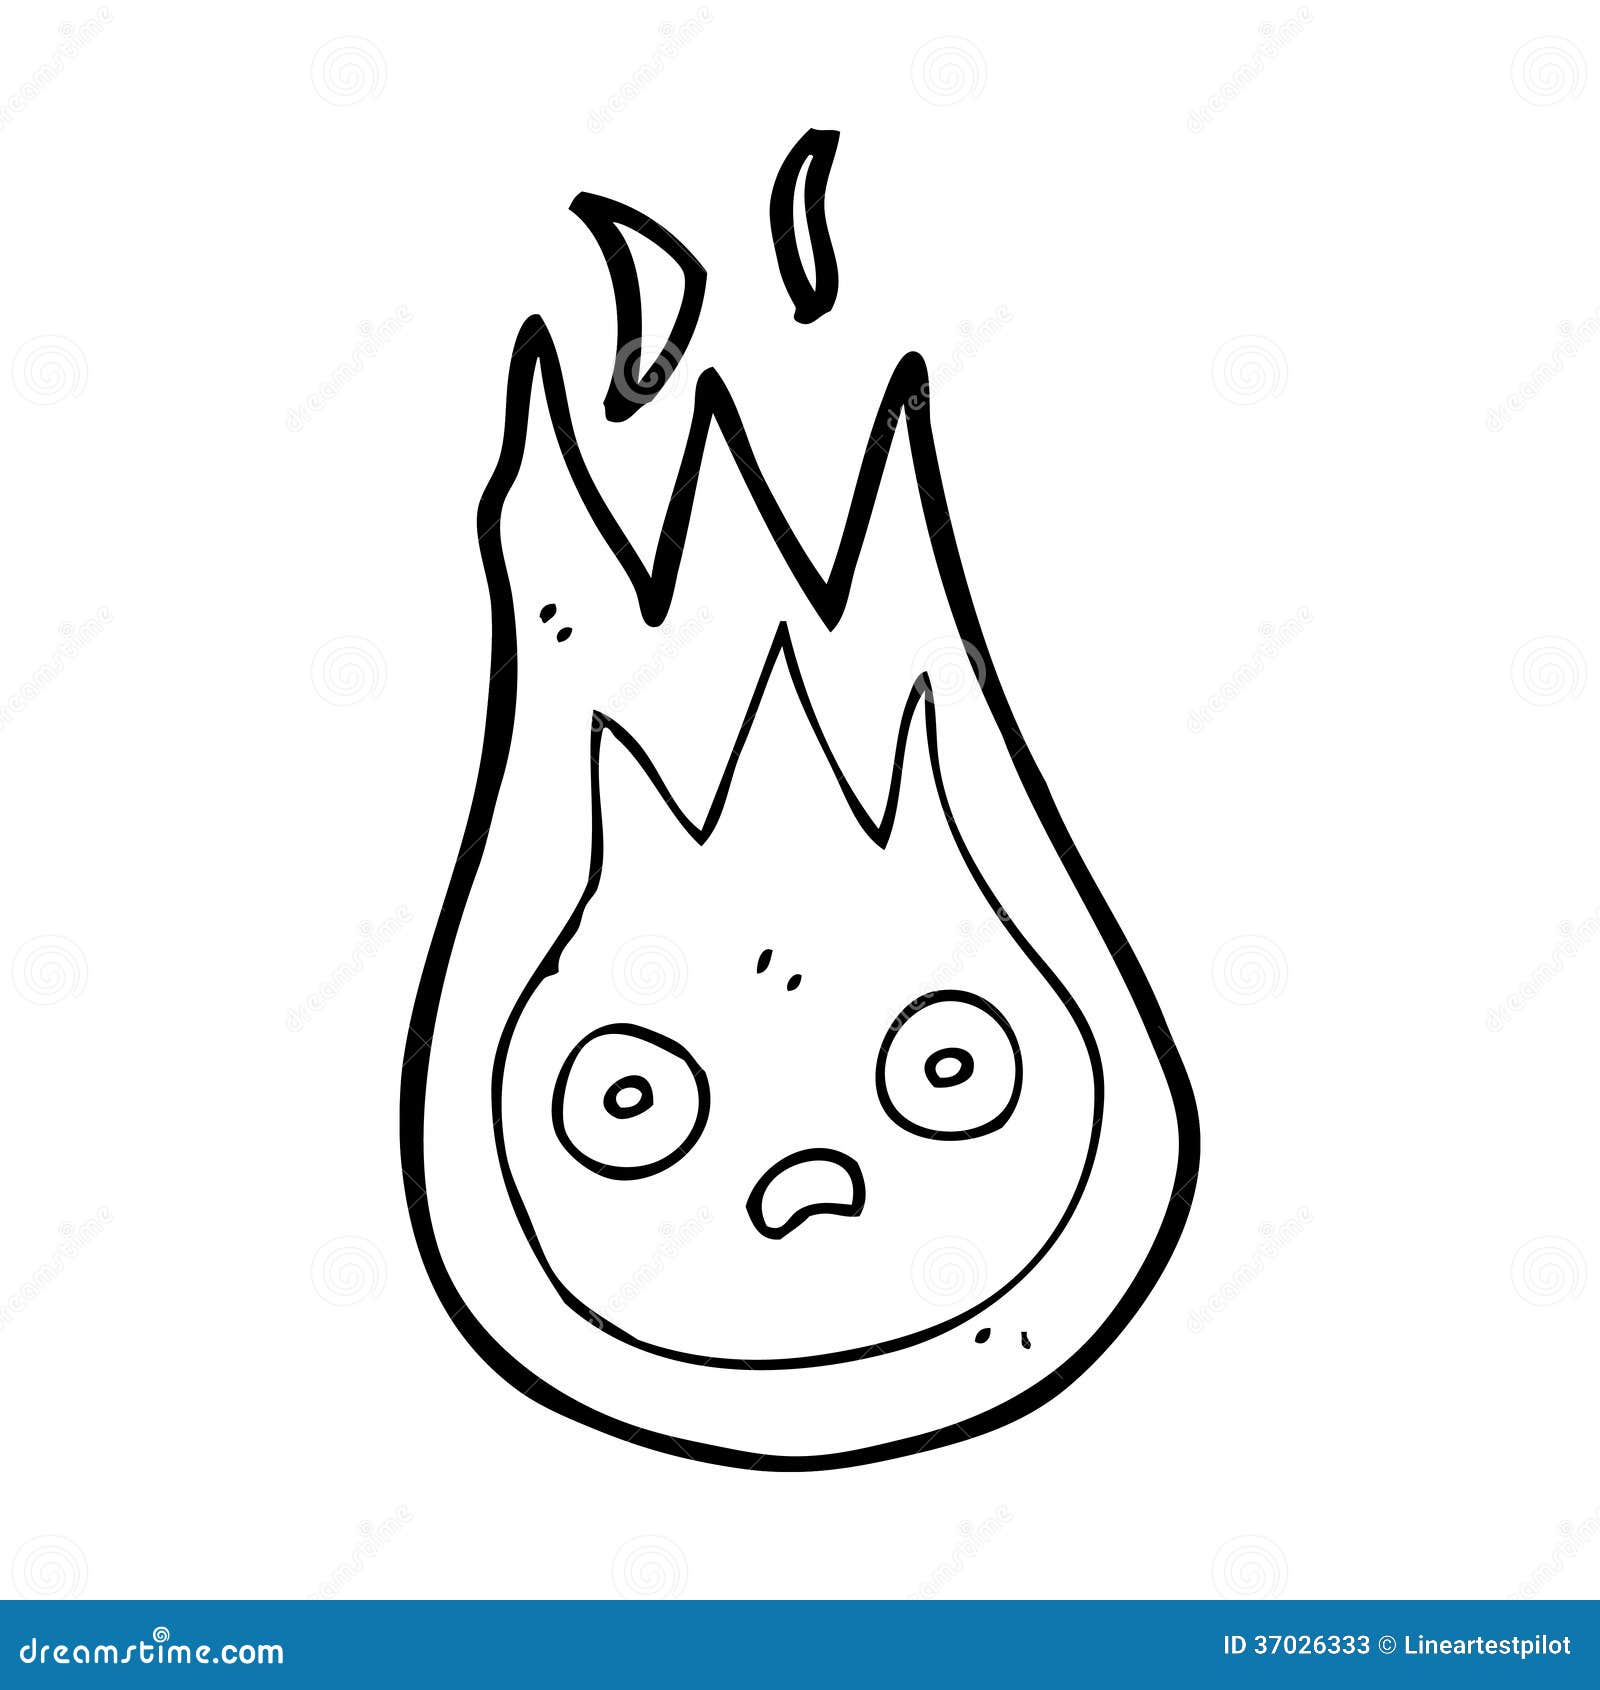 Cartoon friendly fireball stock illustration. Illustration of doodle ...